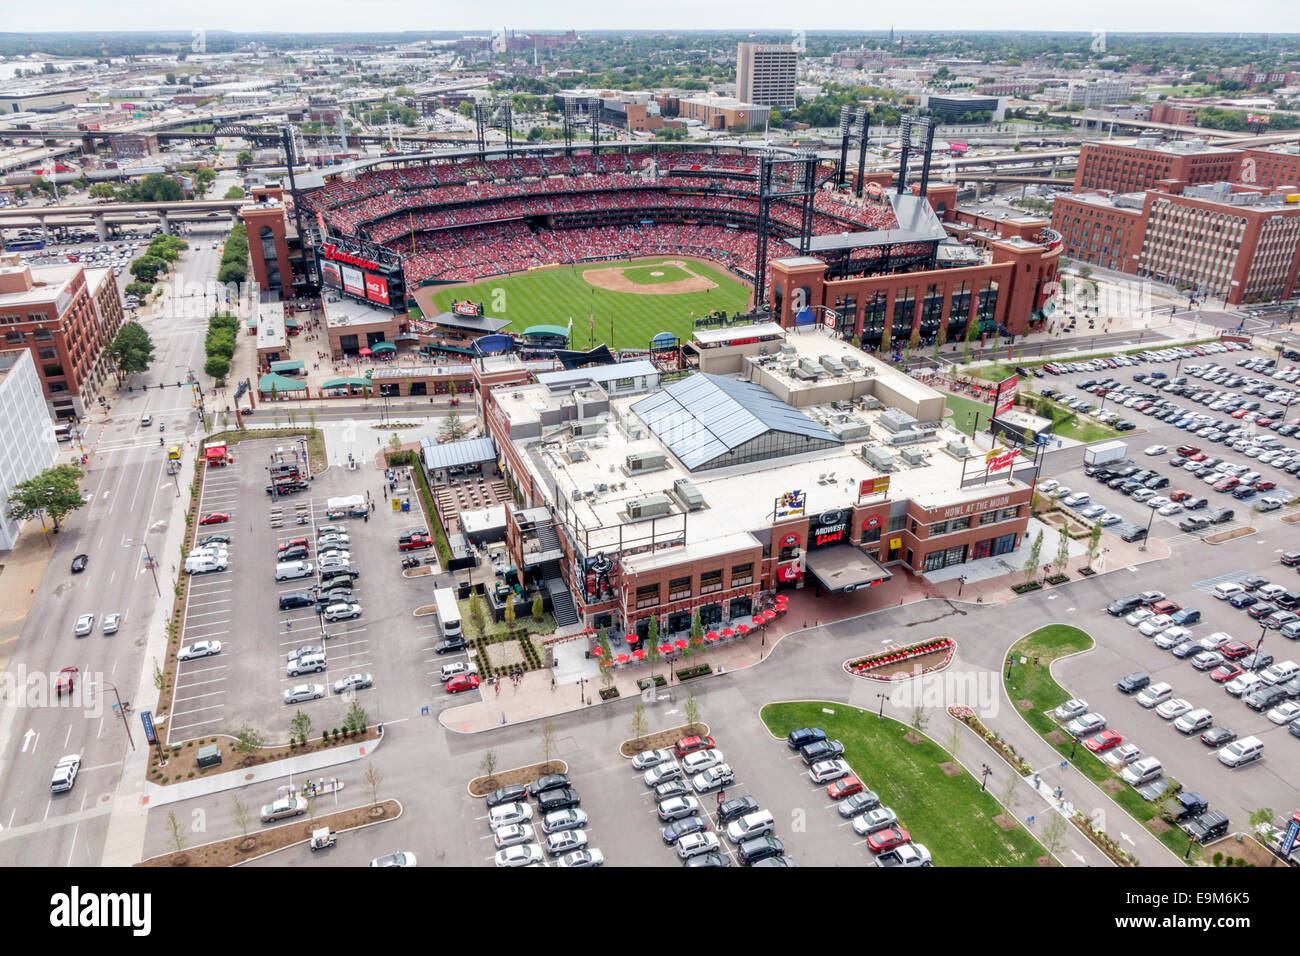 Saint-Louis Missouri, Busch Stadium, Cardinals Hall of Fame Museum, Ballpark Village, ligue majeure de baseball, match, vue aérienne d'en haut, vue, Banque D'Images